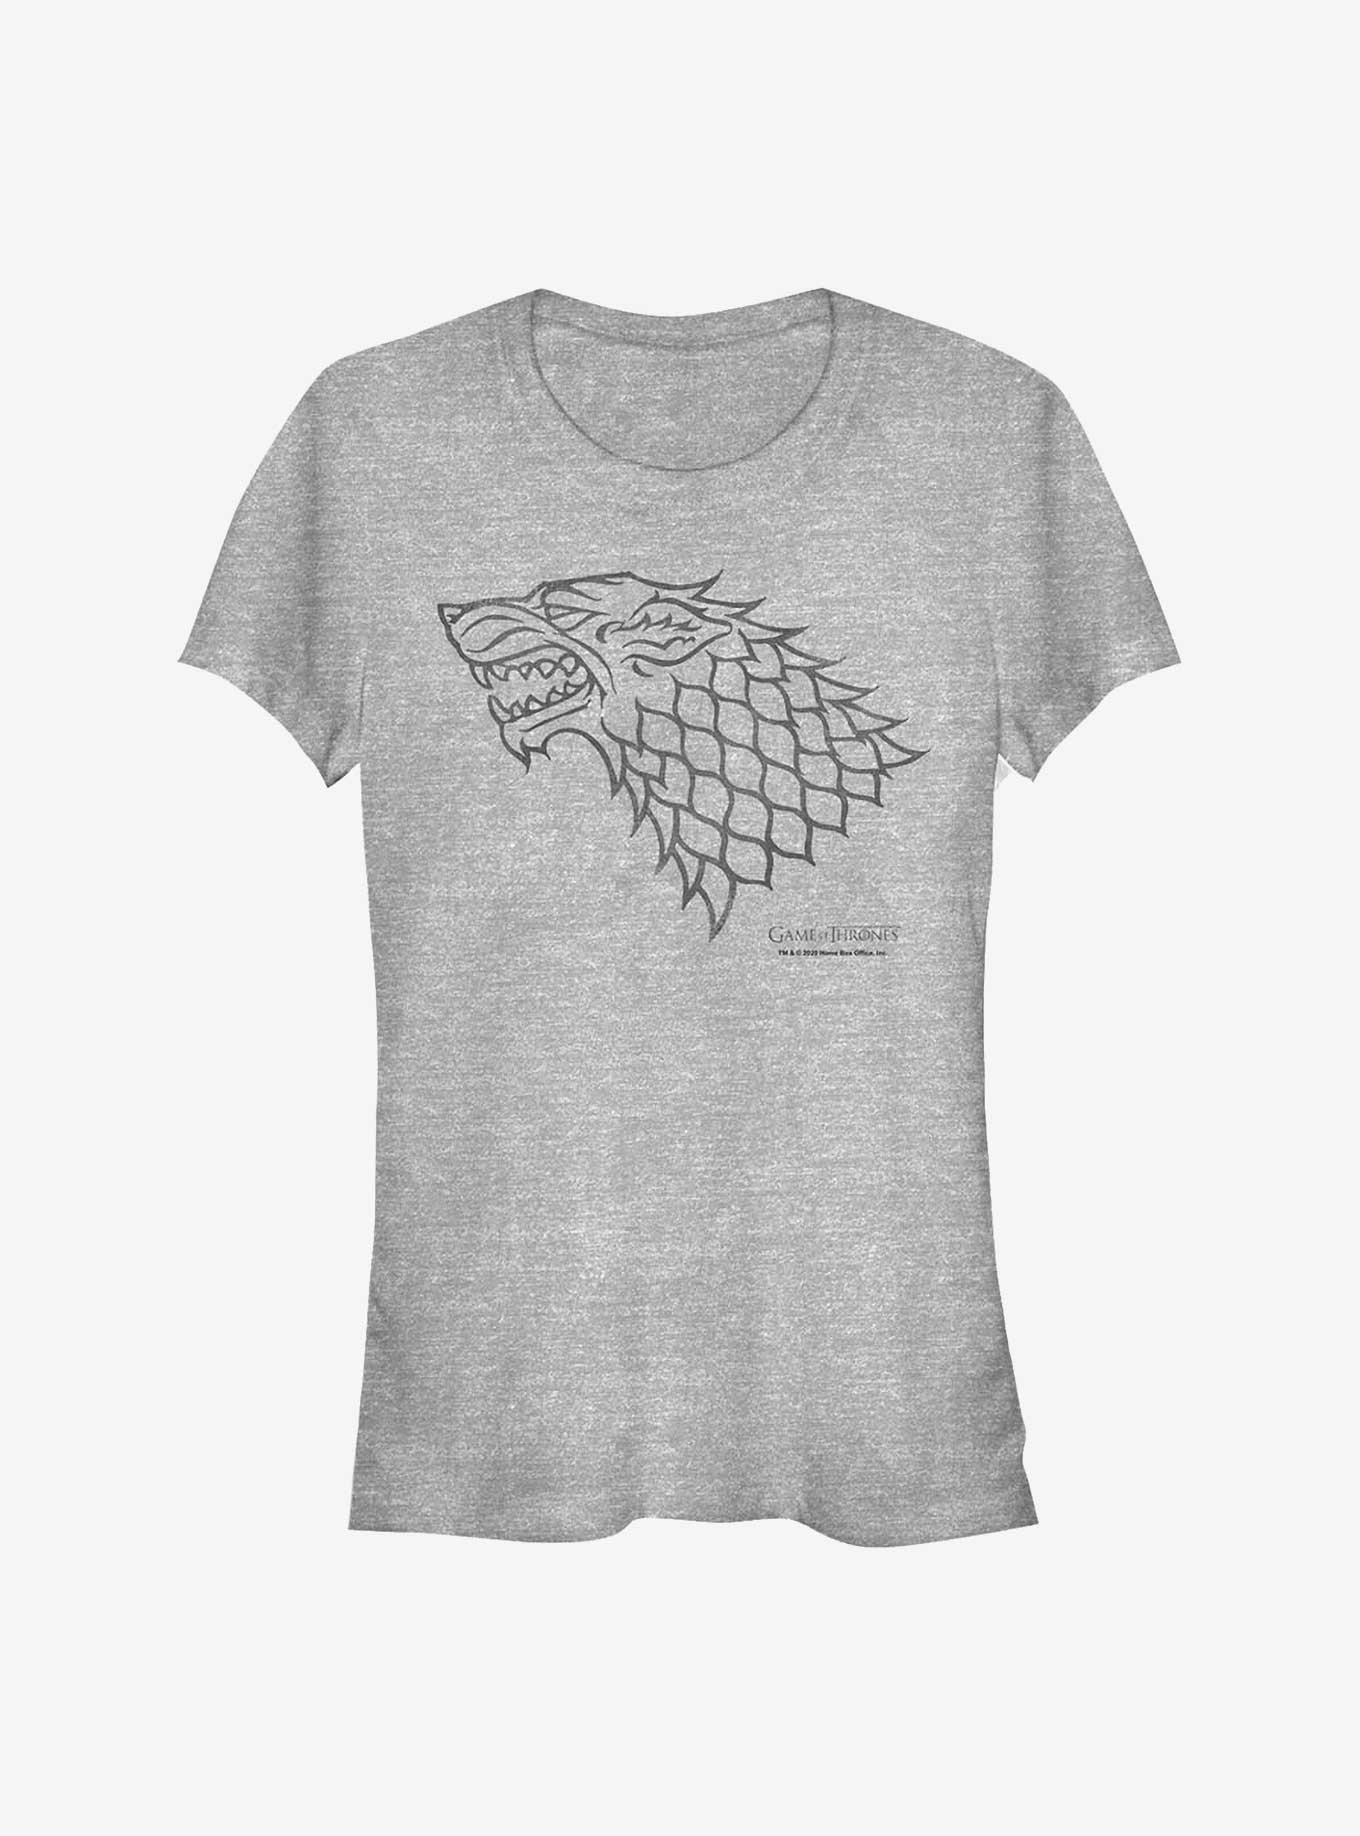 Game Of Thrones House Stark Girls T-Shirt